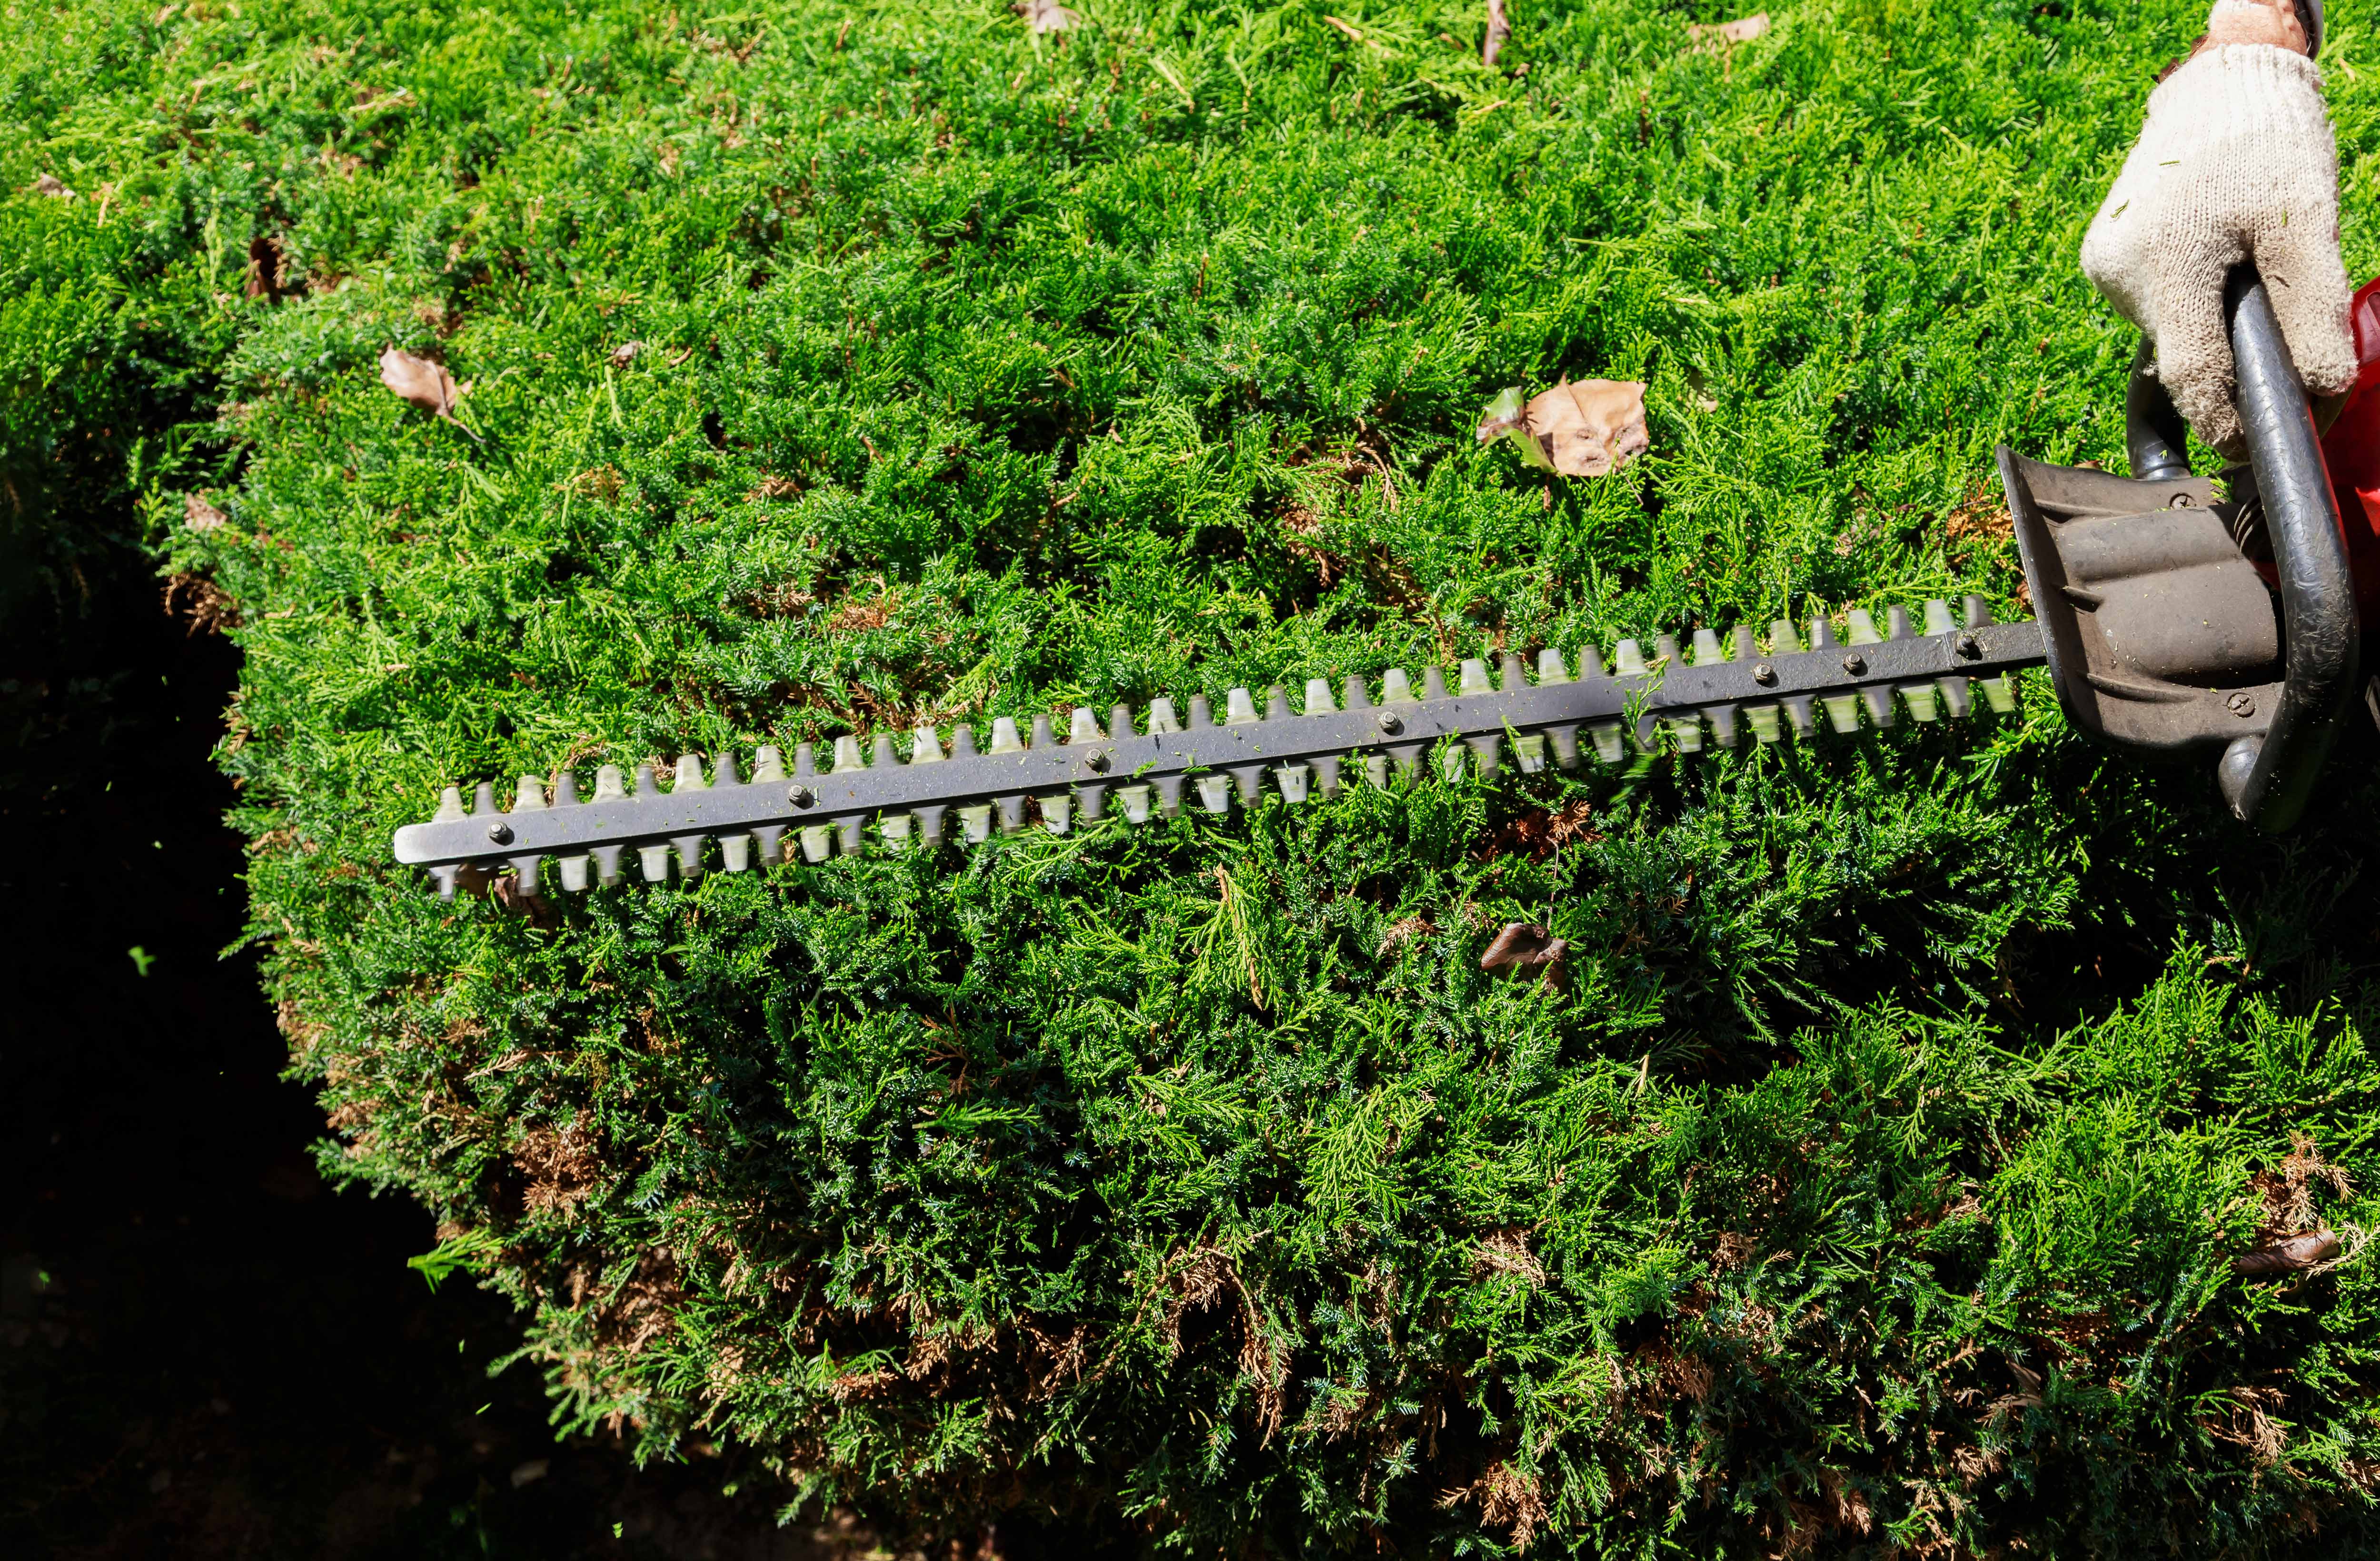 Bush Trimming - Hedge Trimming